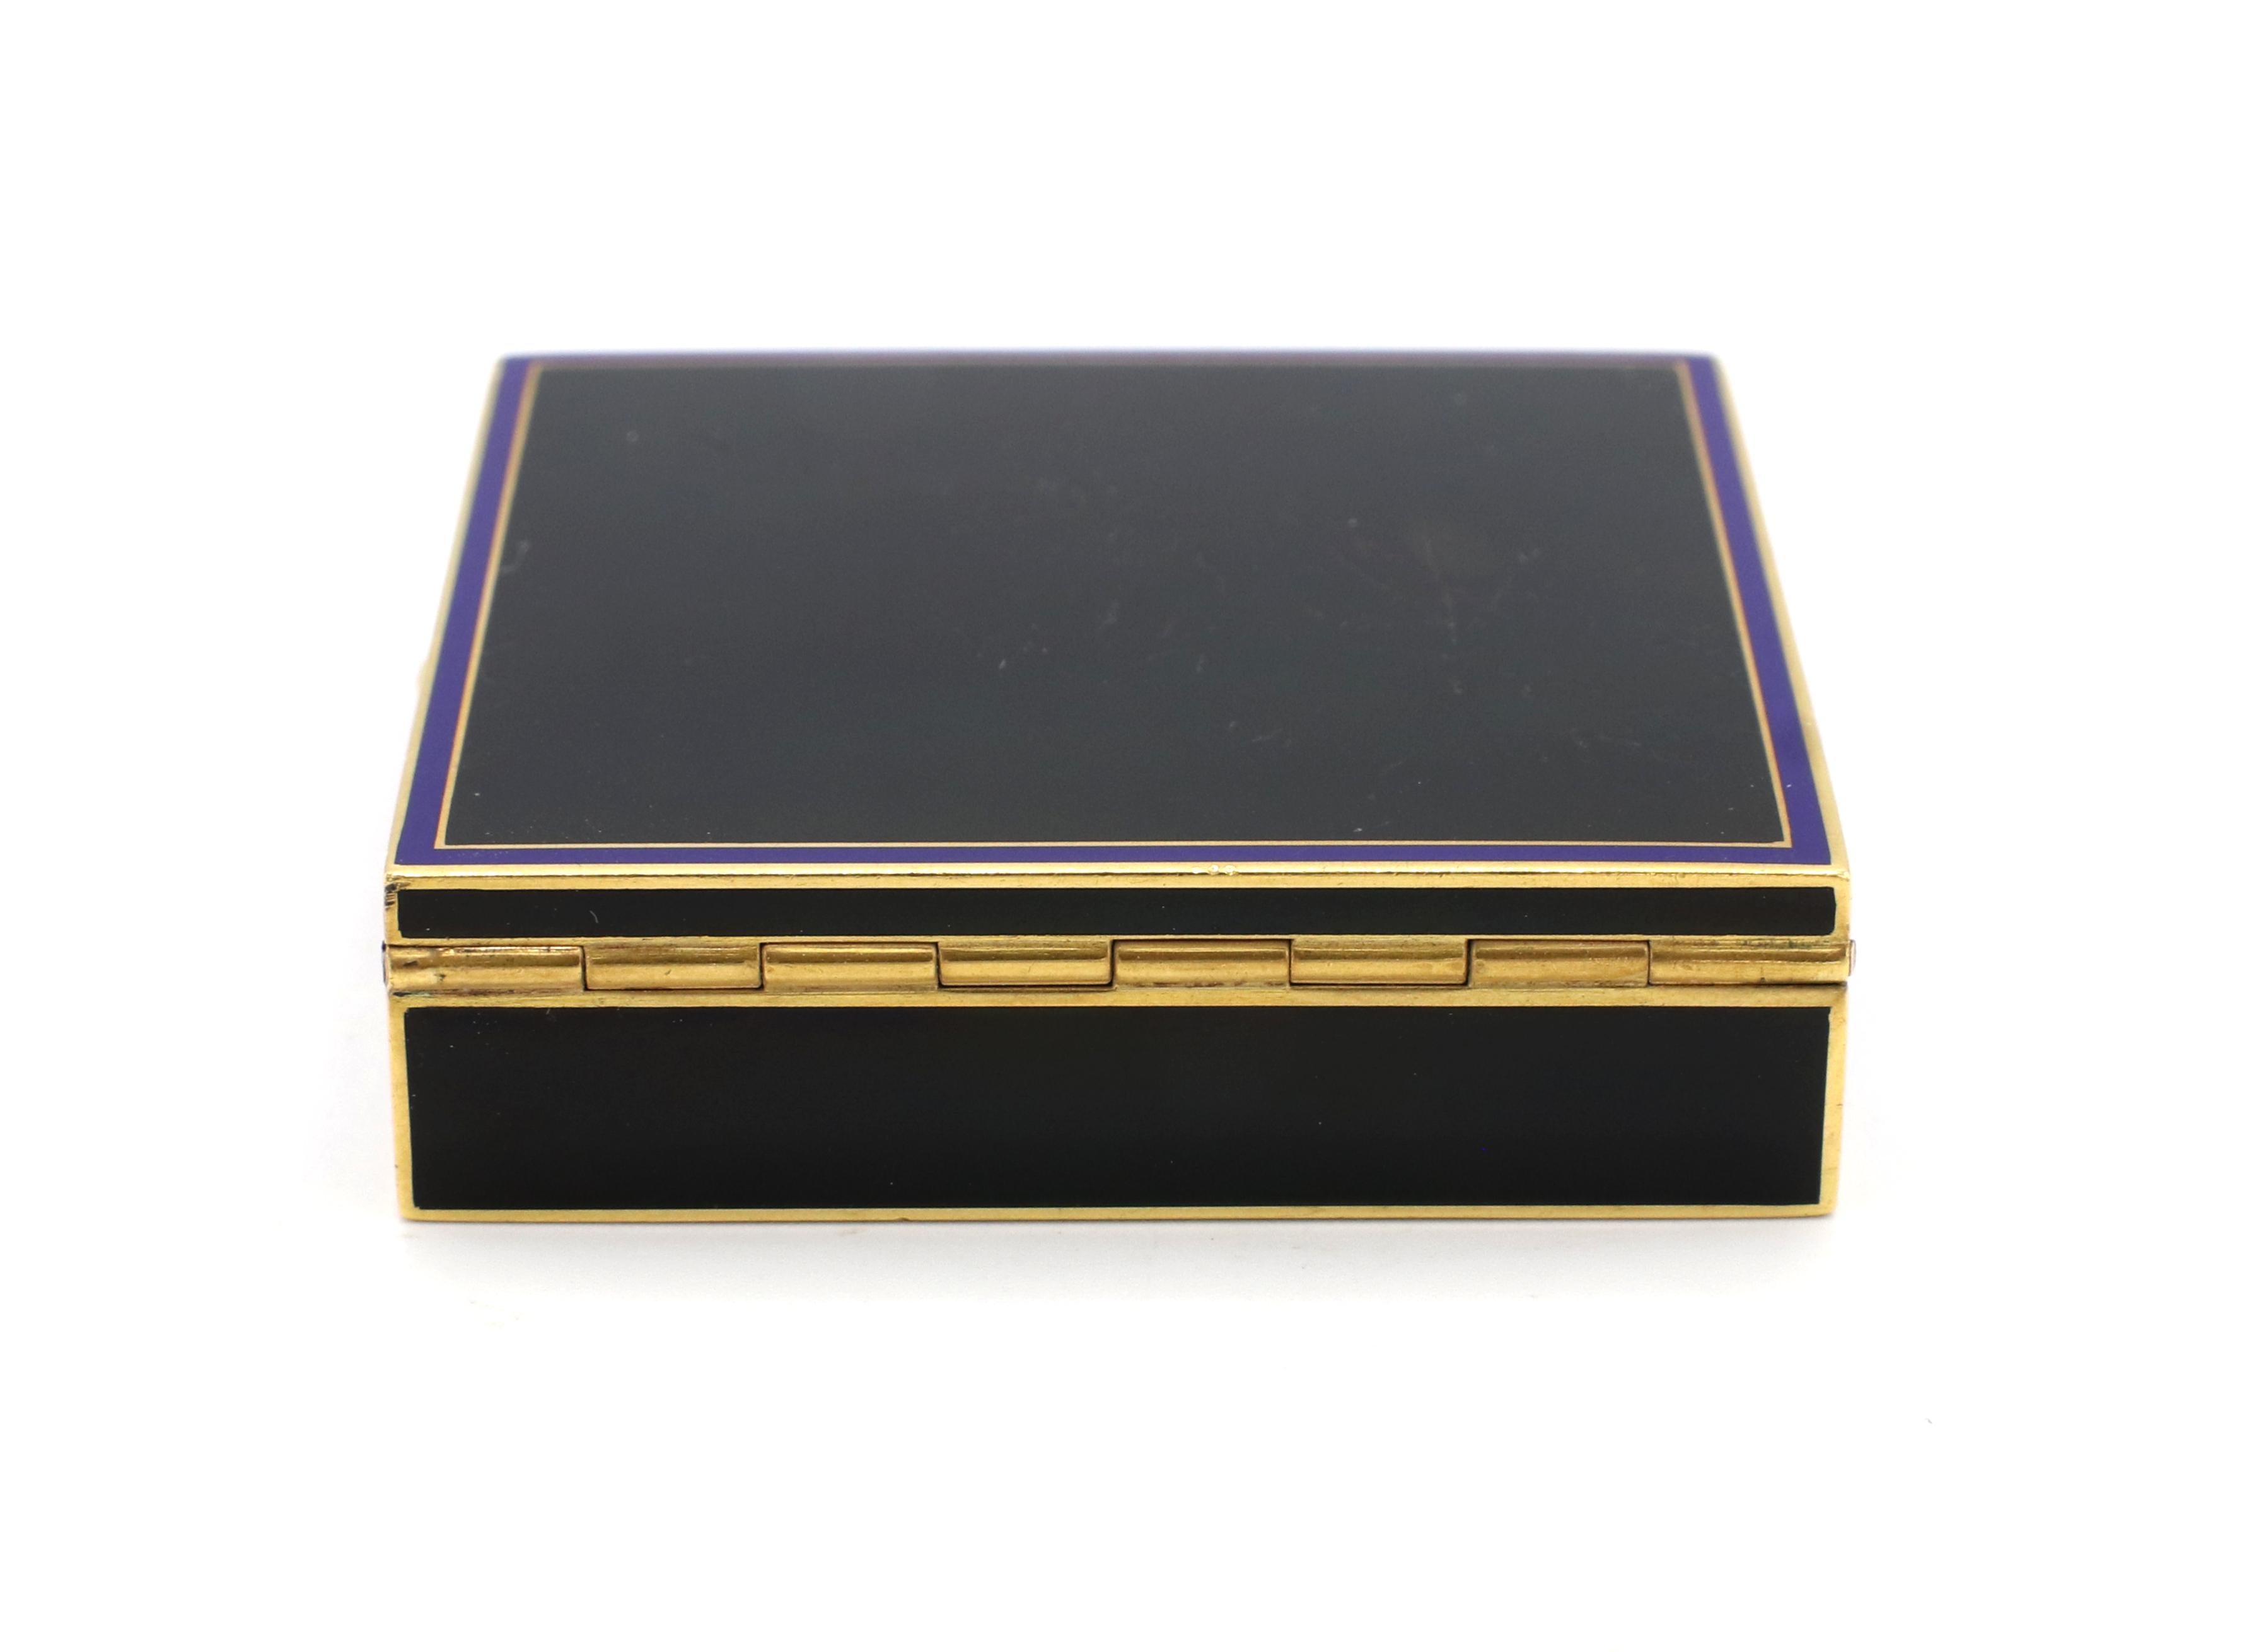 Women's Art Deco Chaumet 18 Karat Yellow Gold & Enamel Mirrored Powder Compact with Case